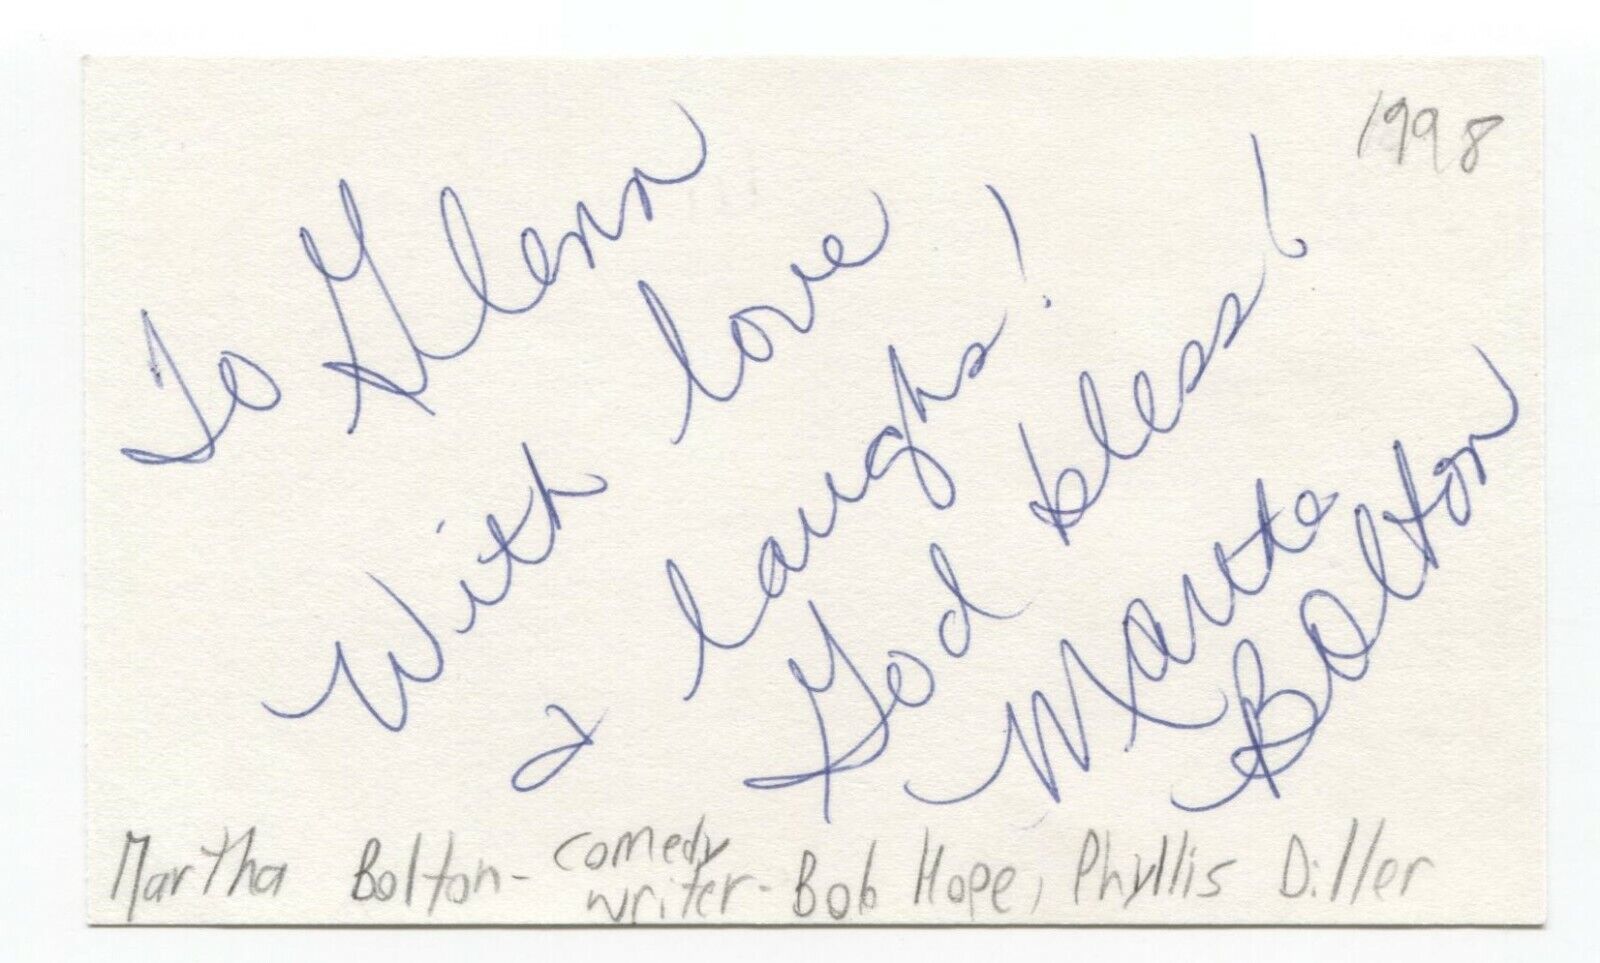 Martha Bolton Signed 3x5 Index Card Autographed Signature Author Comedy Writer